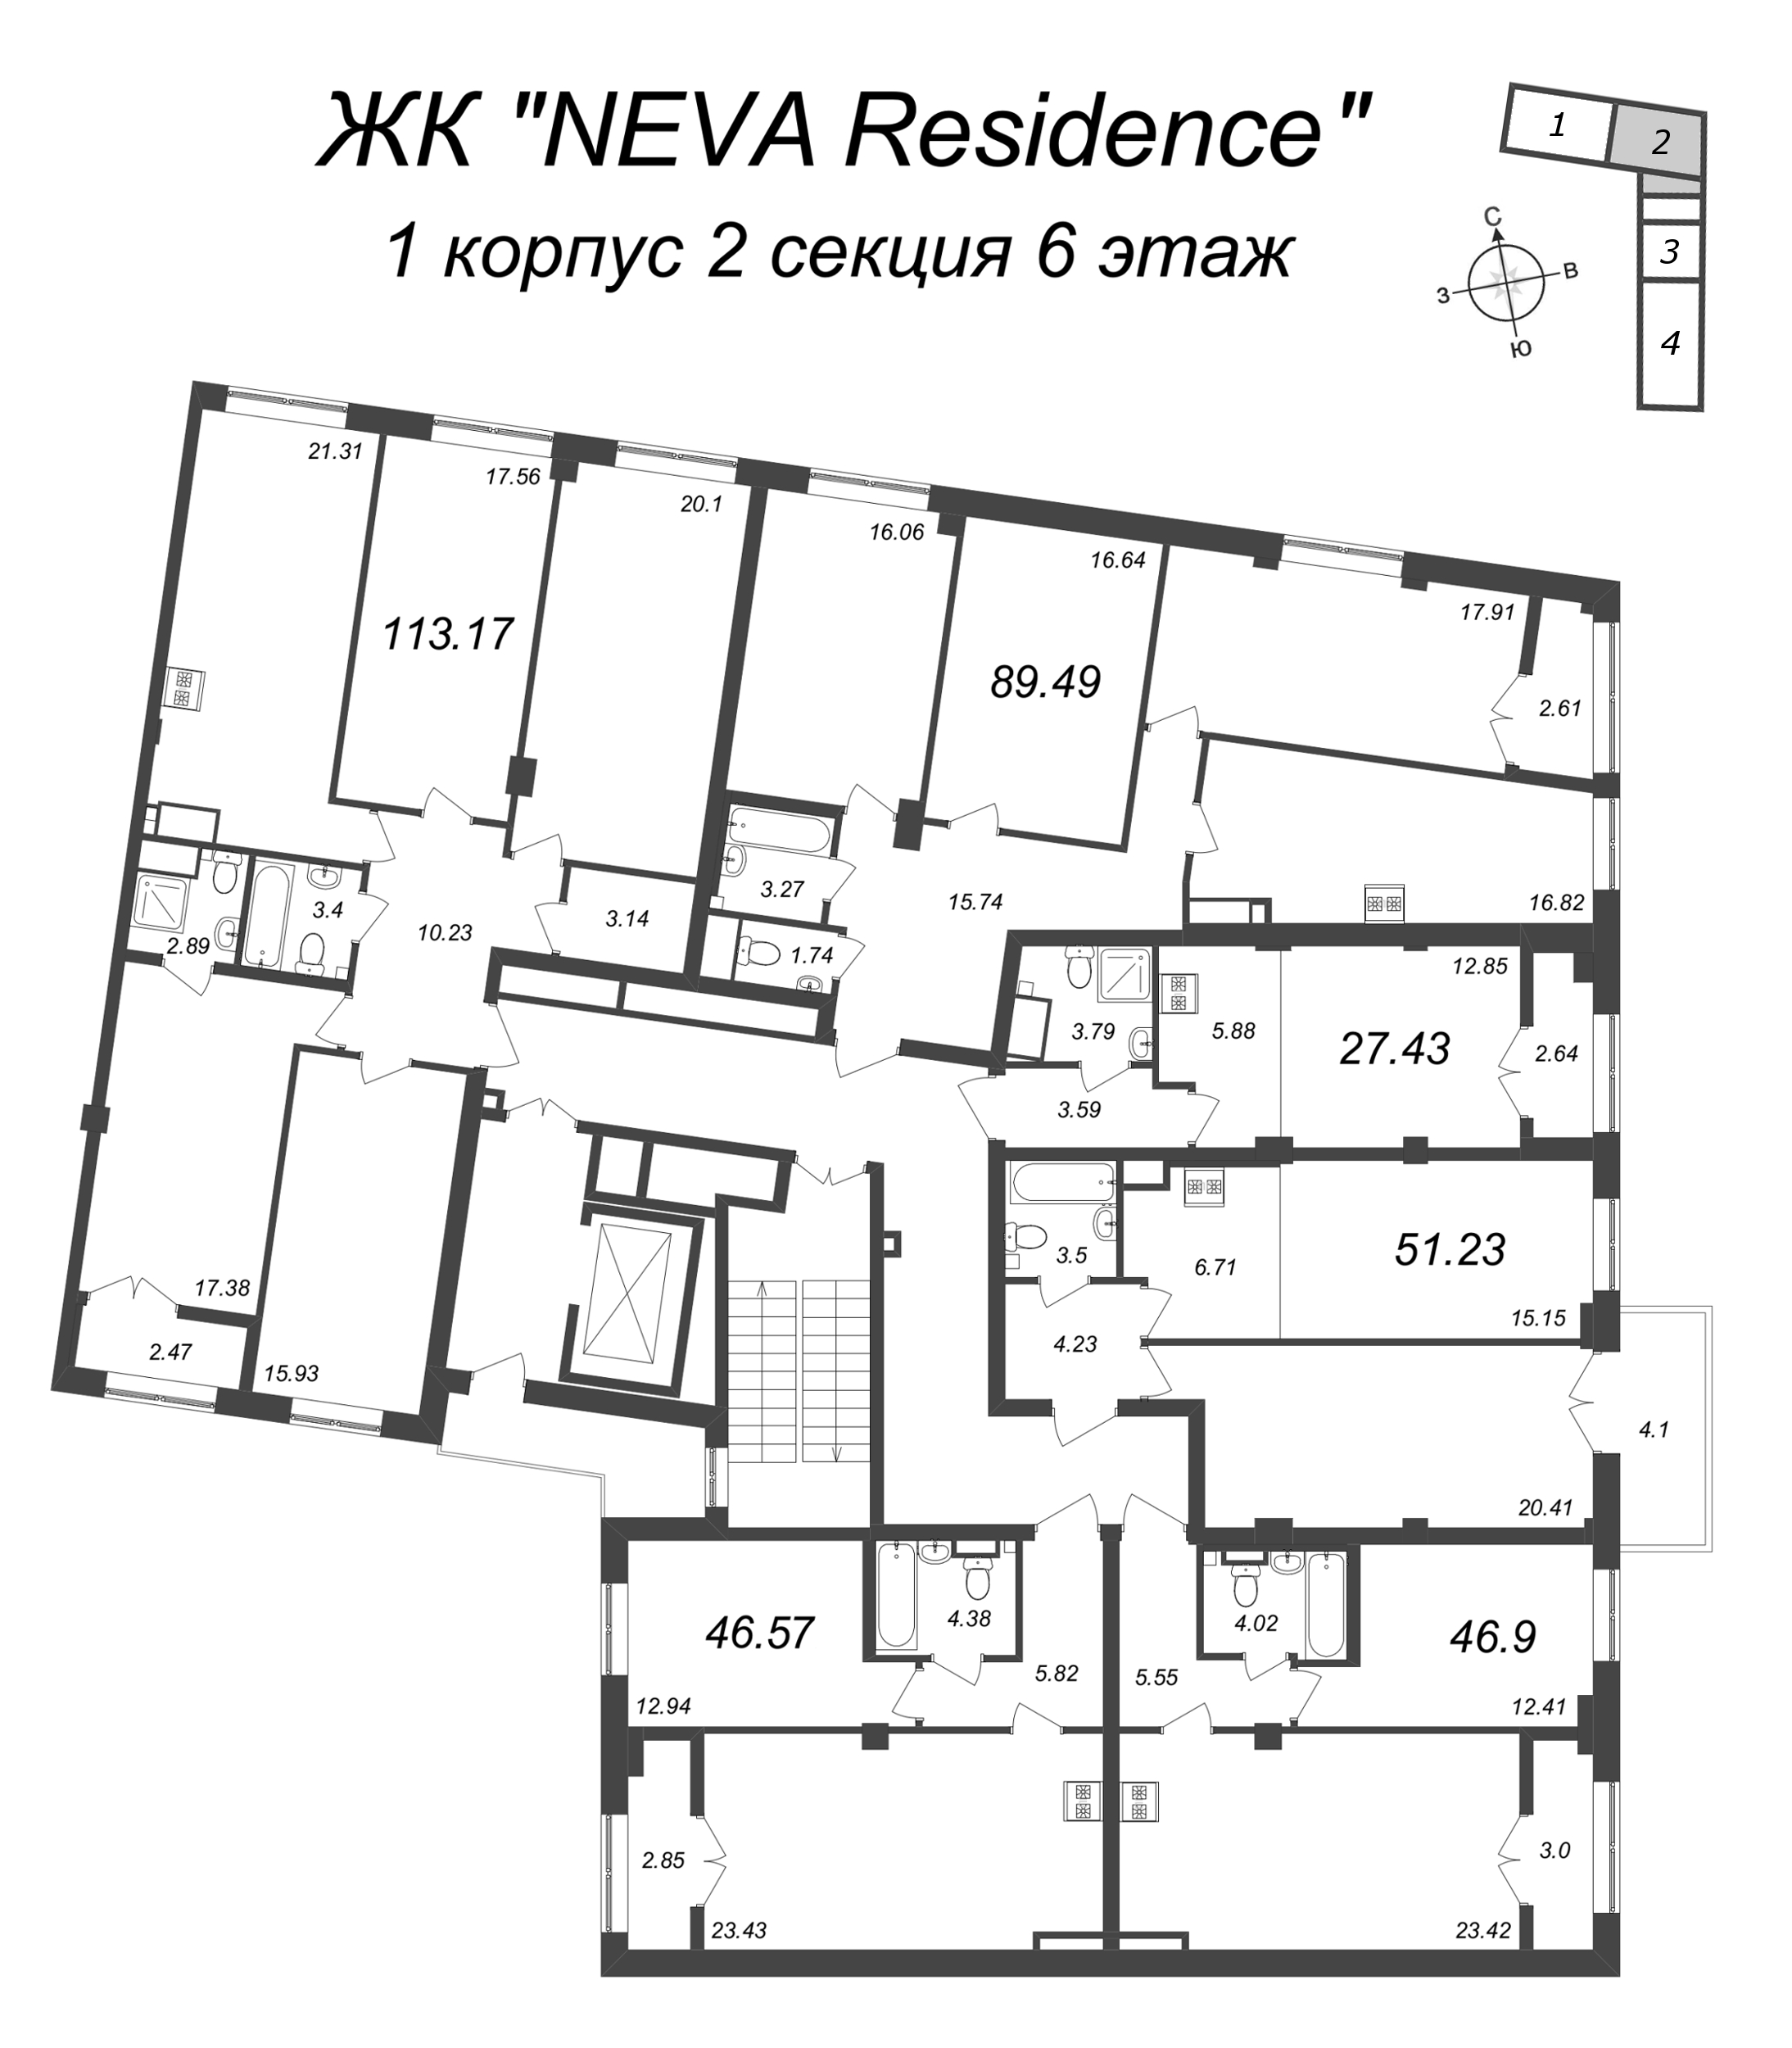 4-комнатная (Евро) квартира, 89.49 м² - планировка этажа